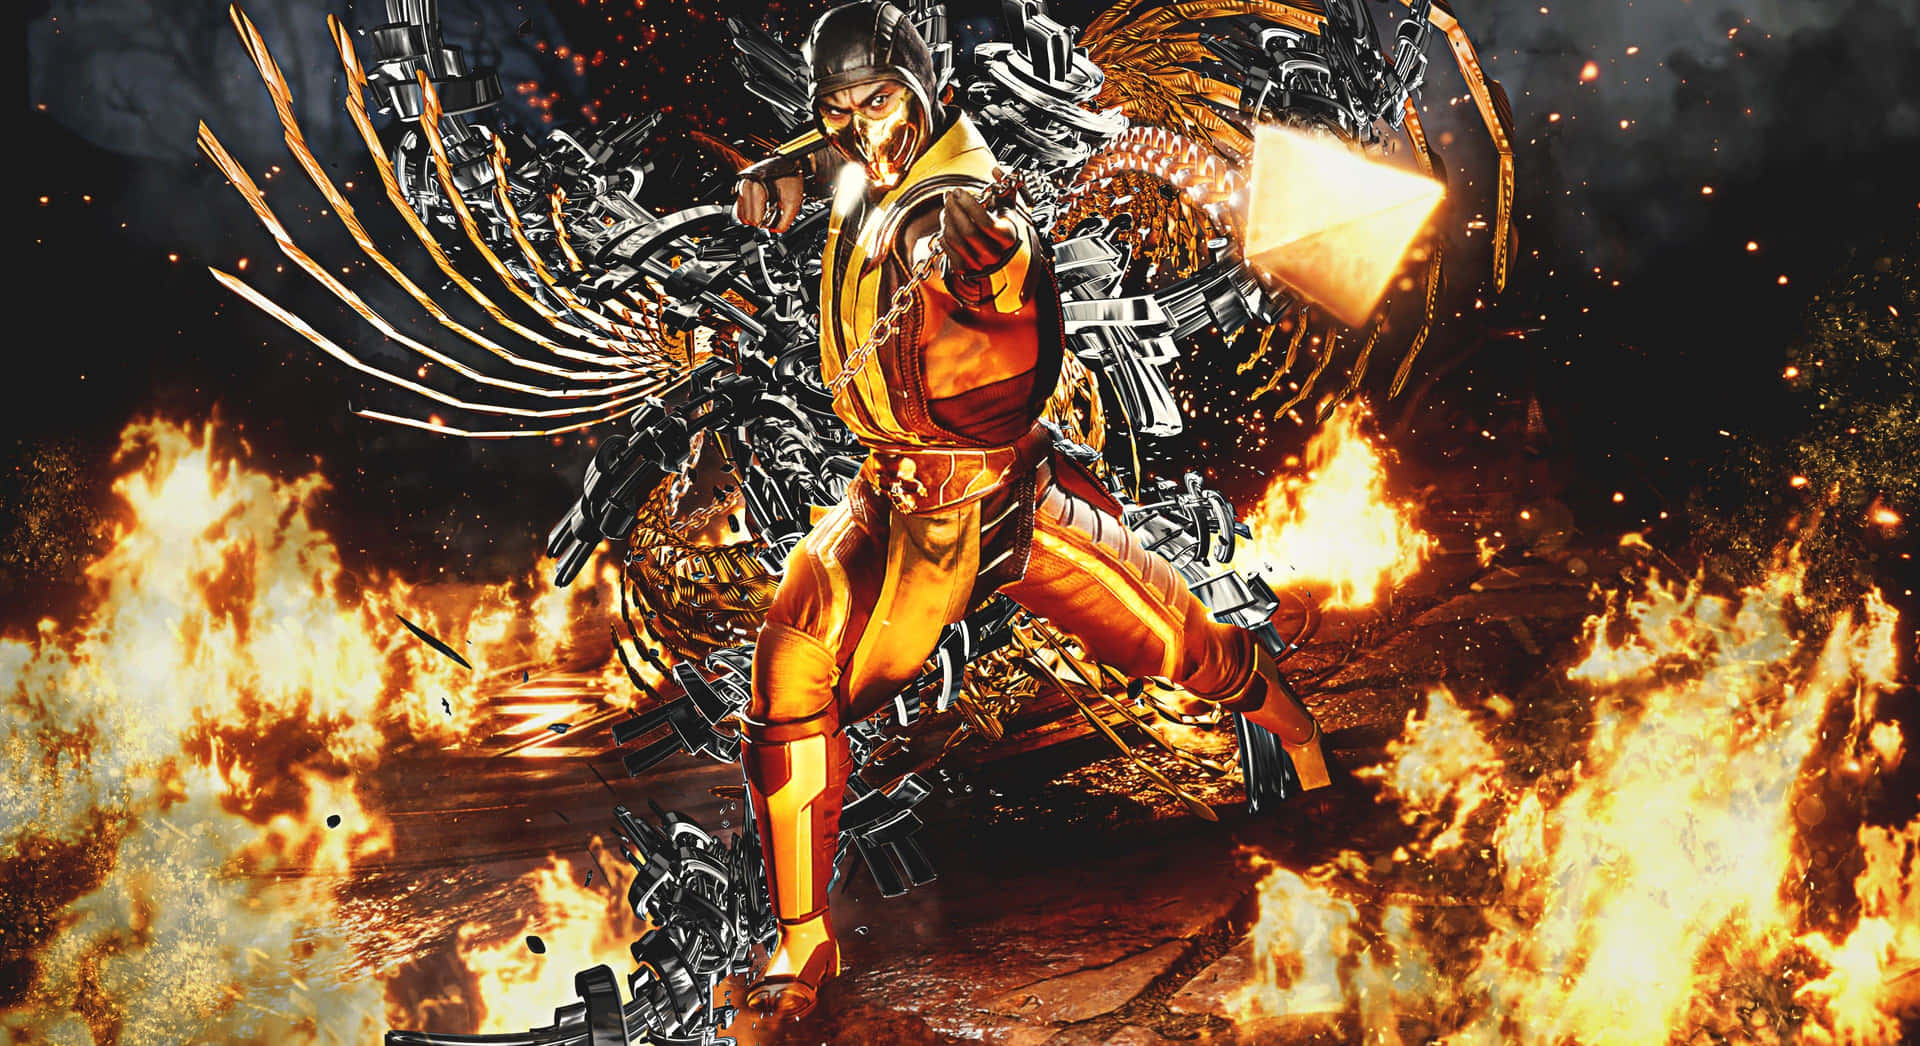 Brutal Fatality in Mortal Kombat Wallpaper